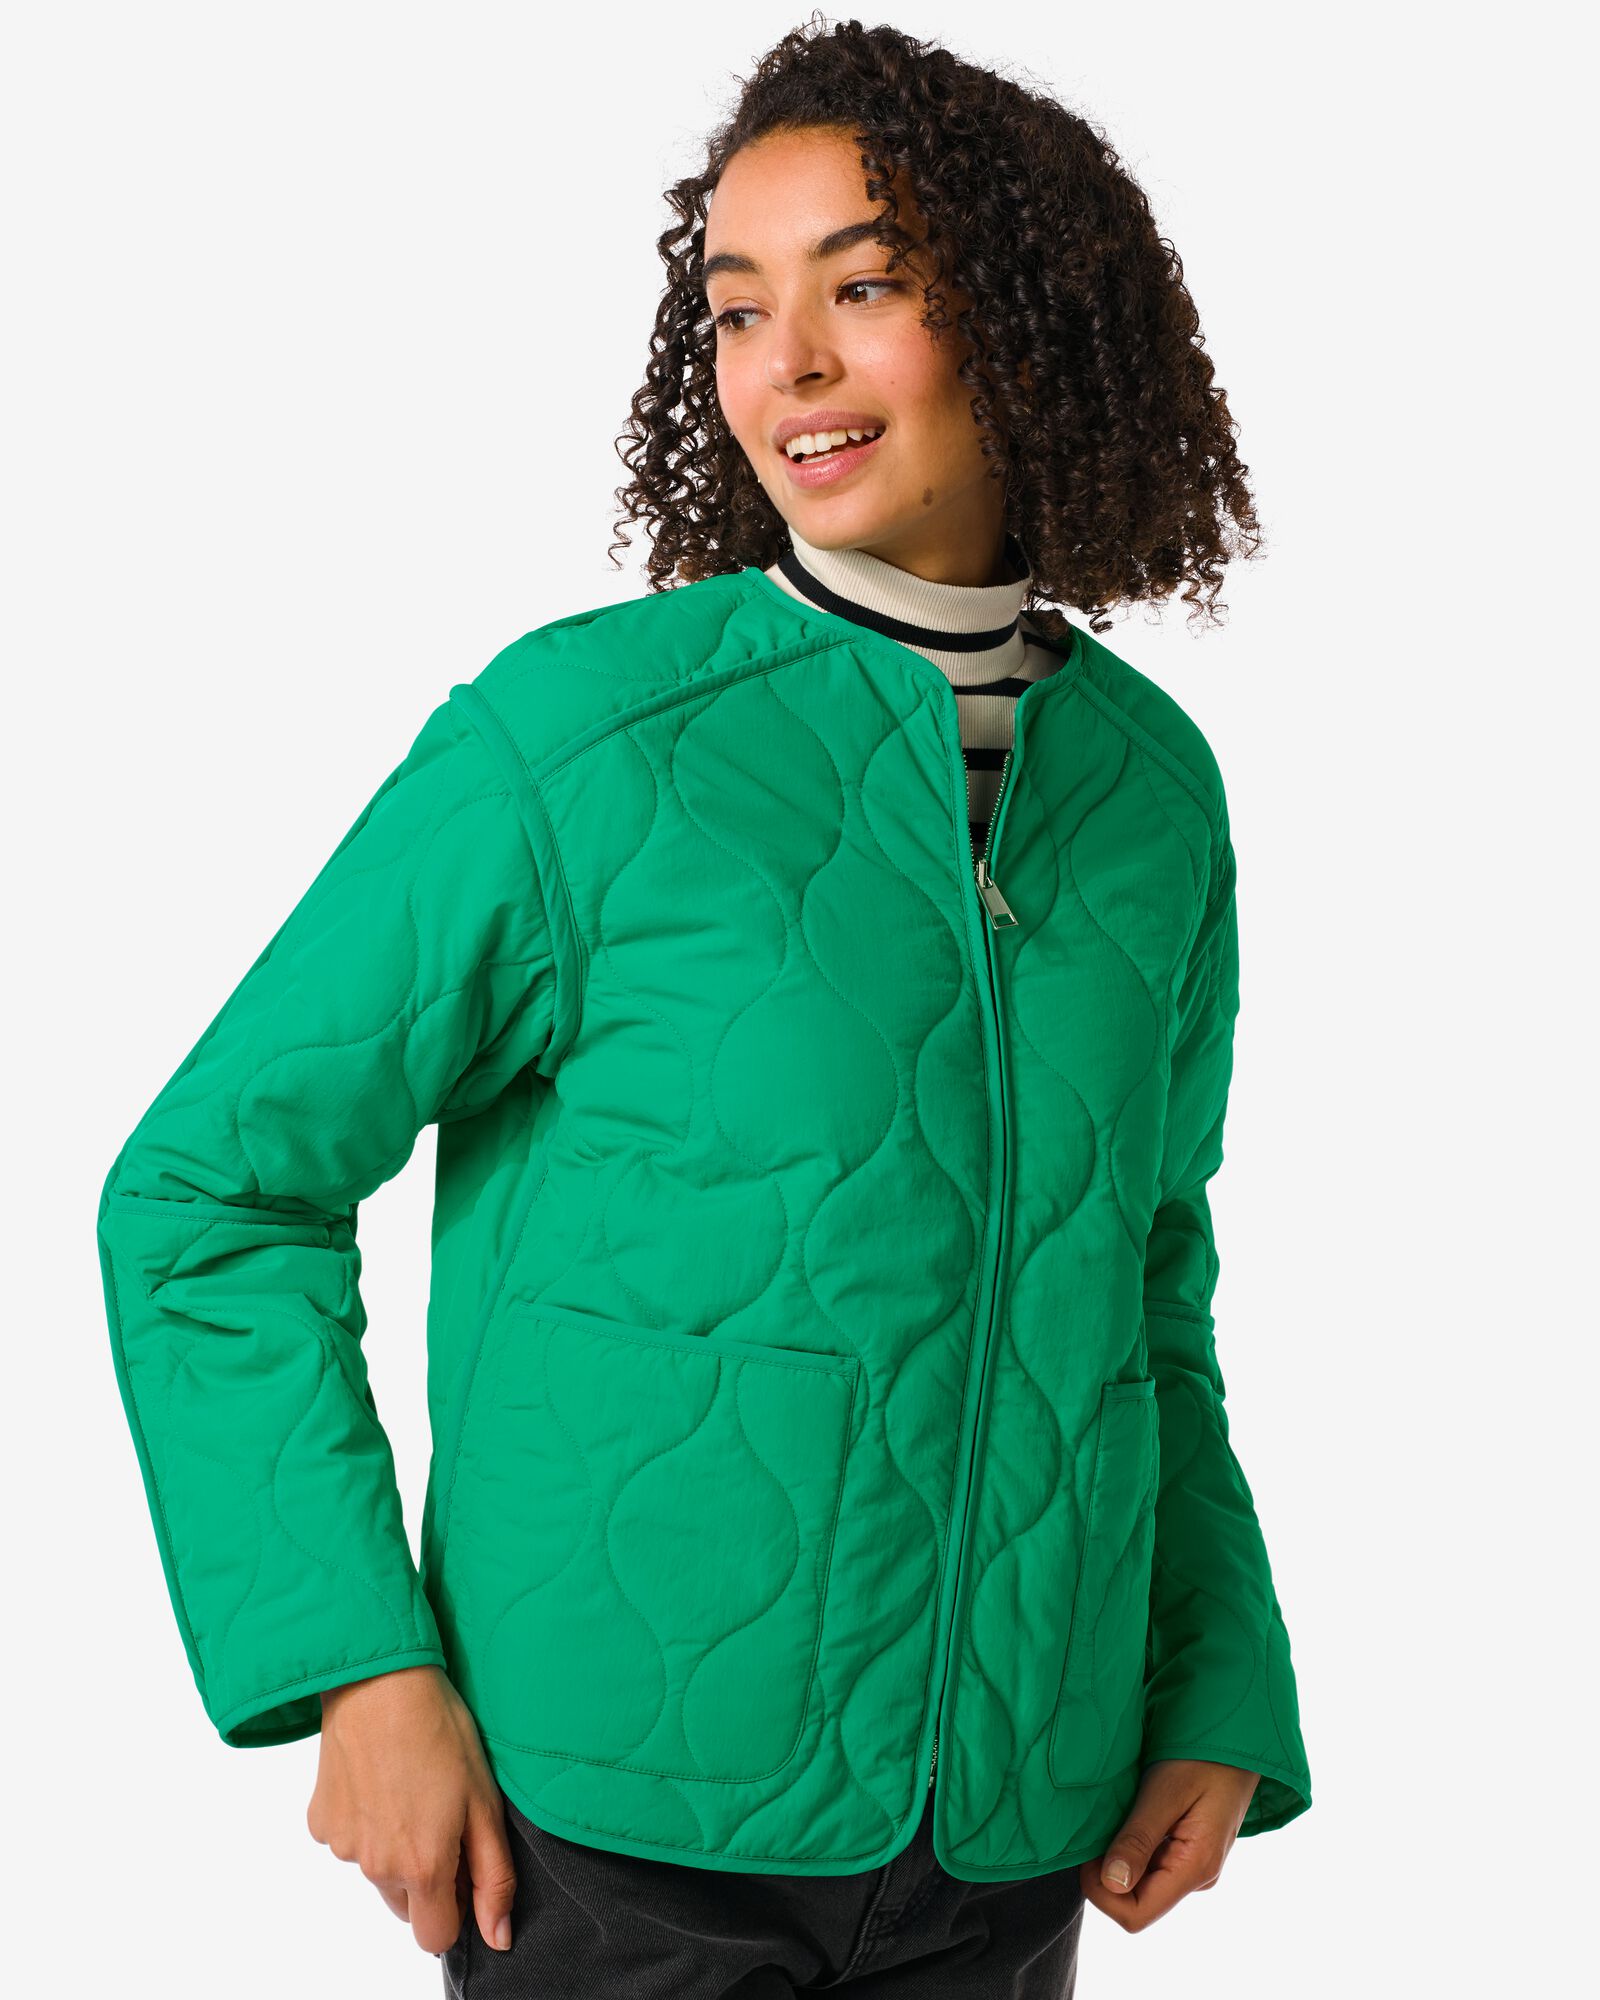 hema manteau réversible femme eloise avec manches zippées vert (vert)